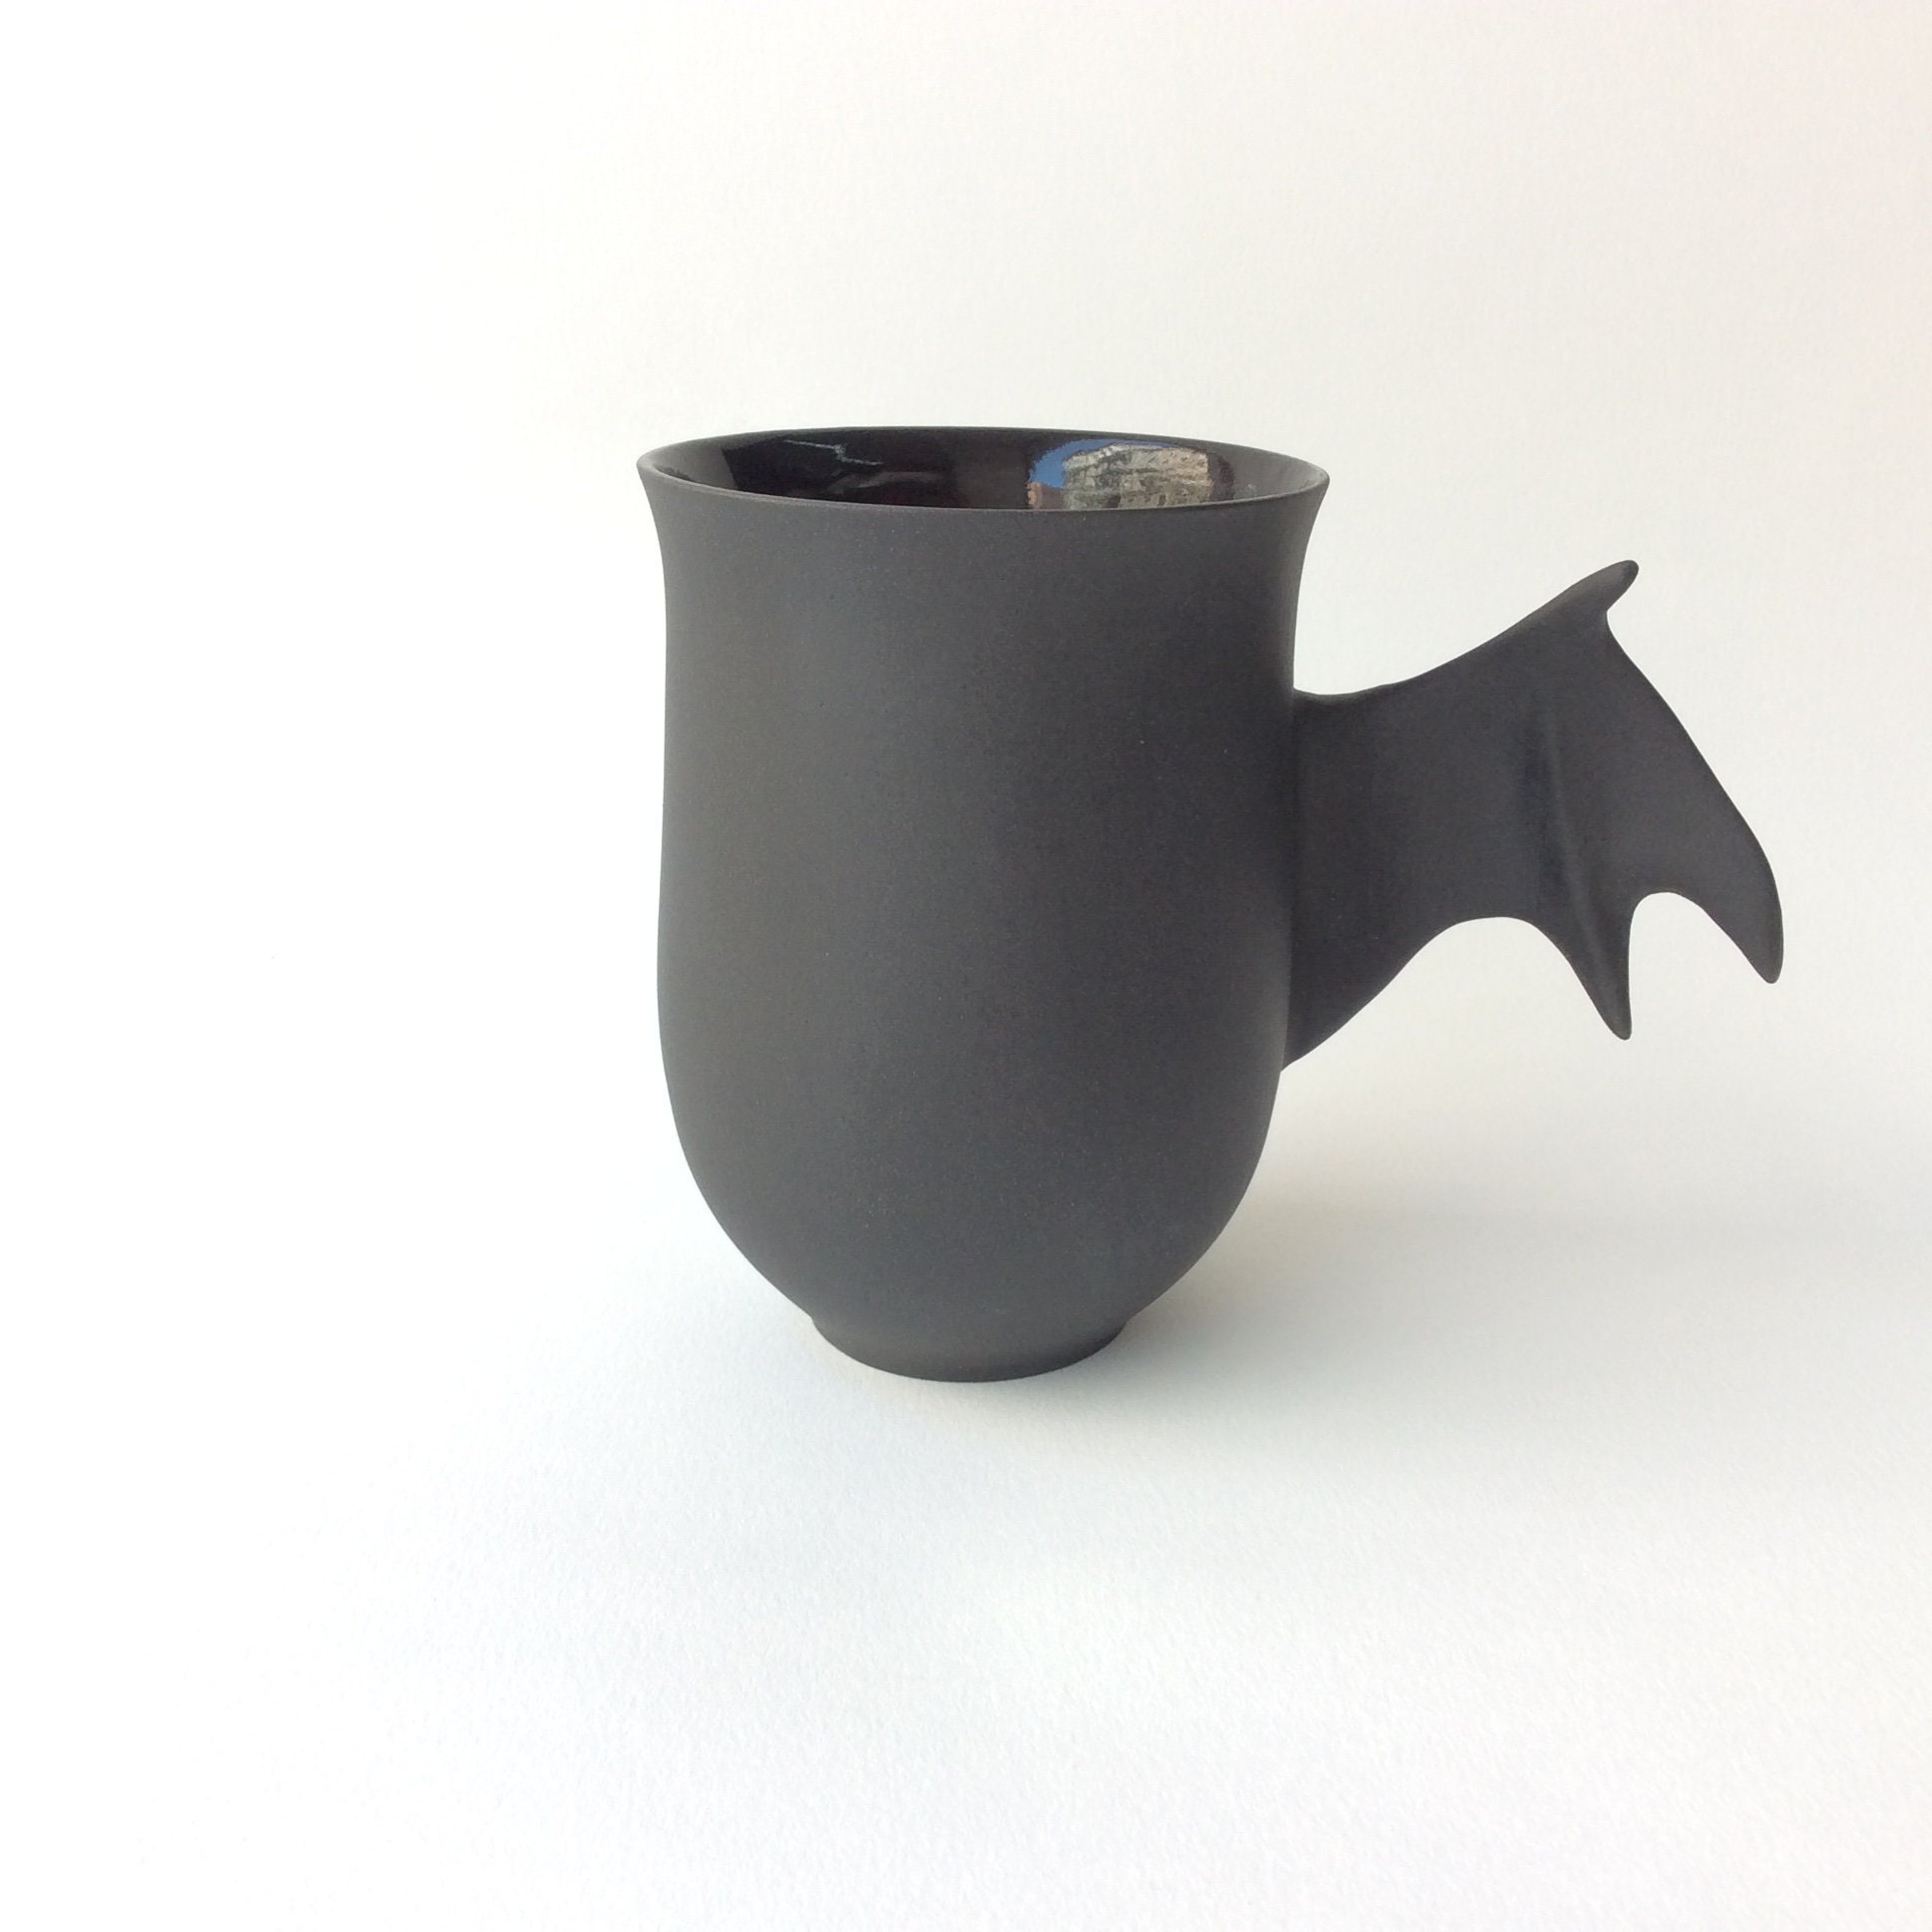 OUTPOST POTTERY Tile Spinner 1.0 the Best Reusable Pottery Bat